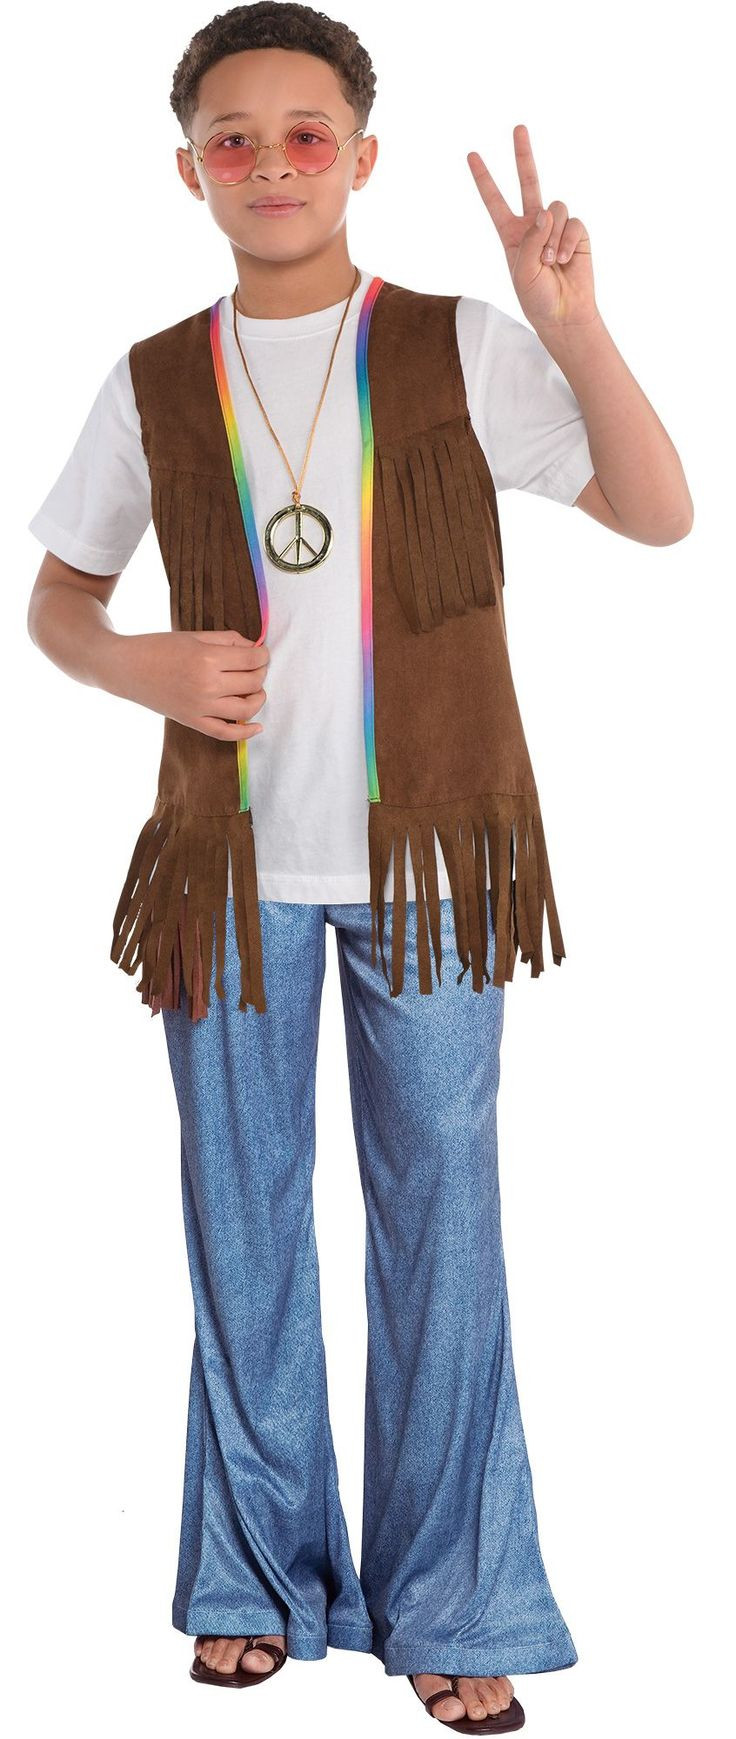 DIY Disco Costumes
 Best 25 Hippie costume ideas on Pinterest